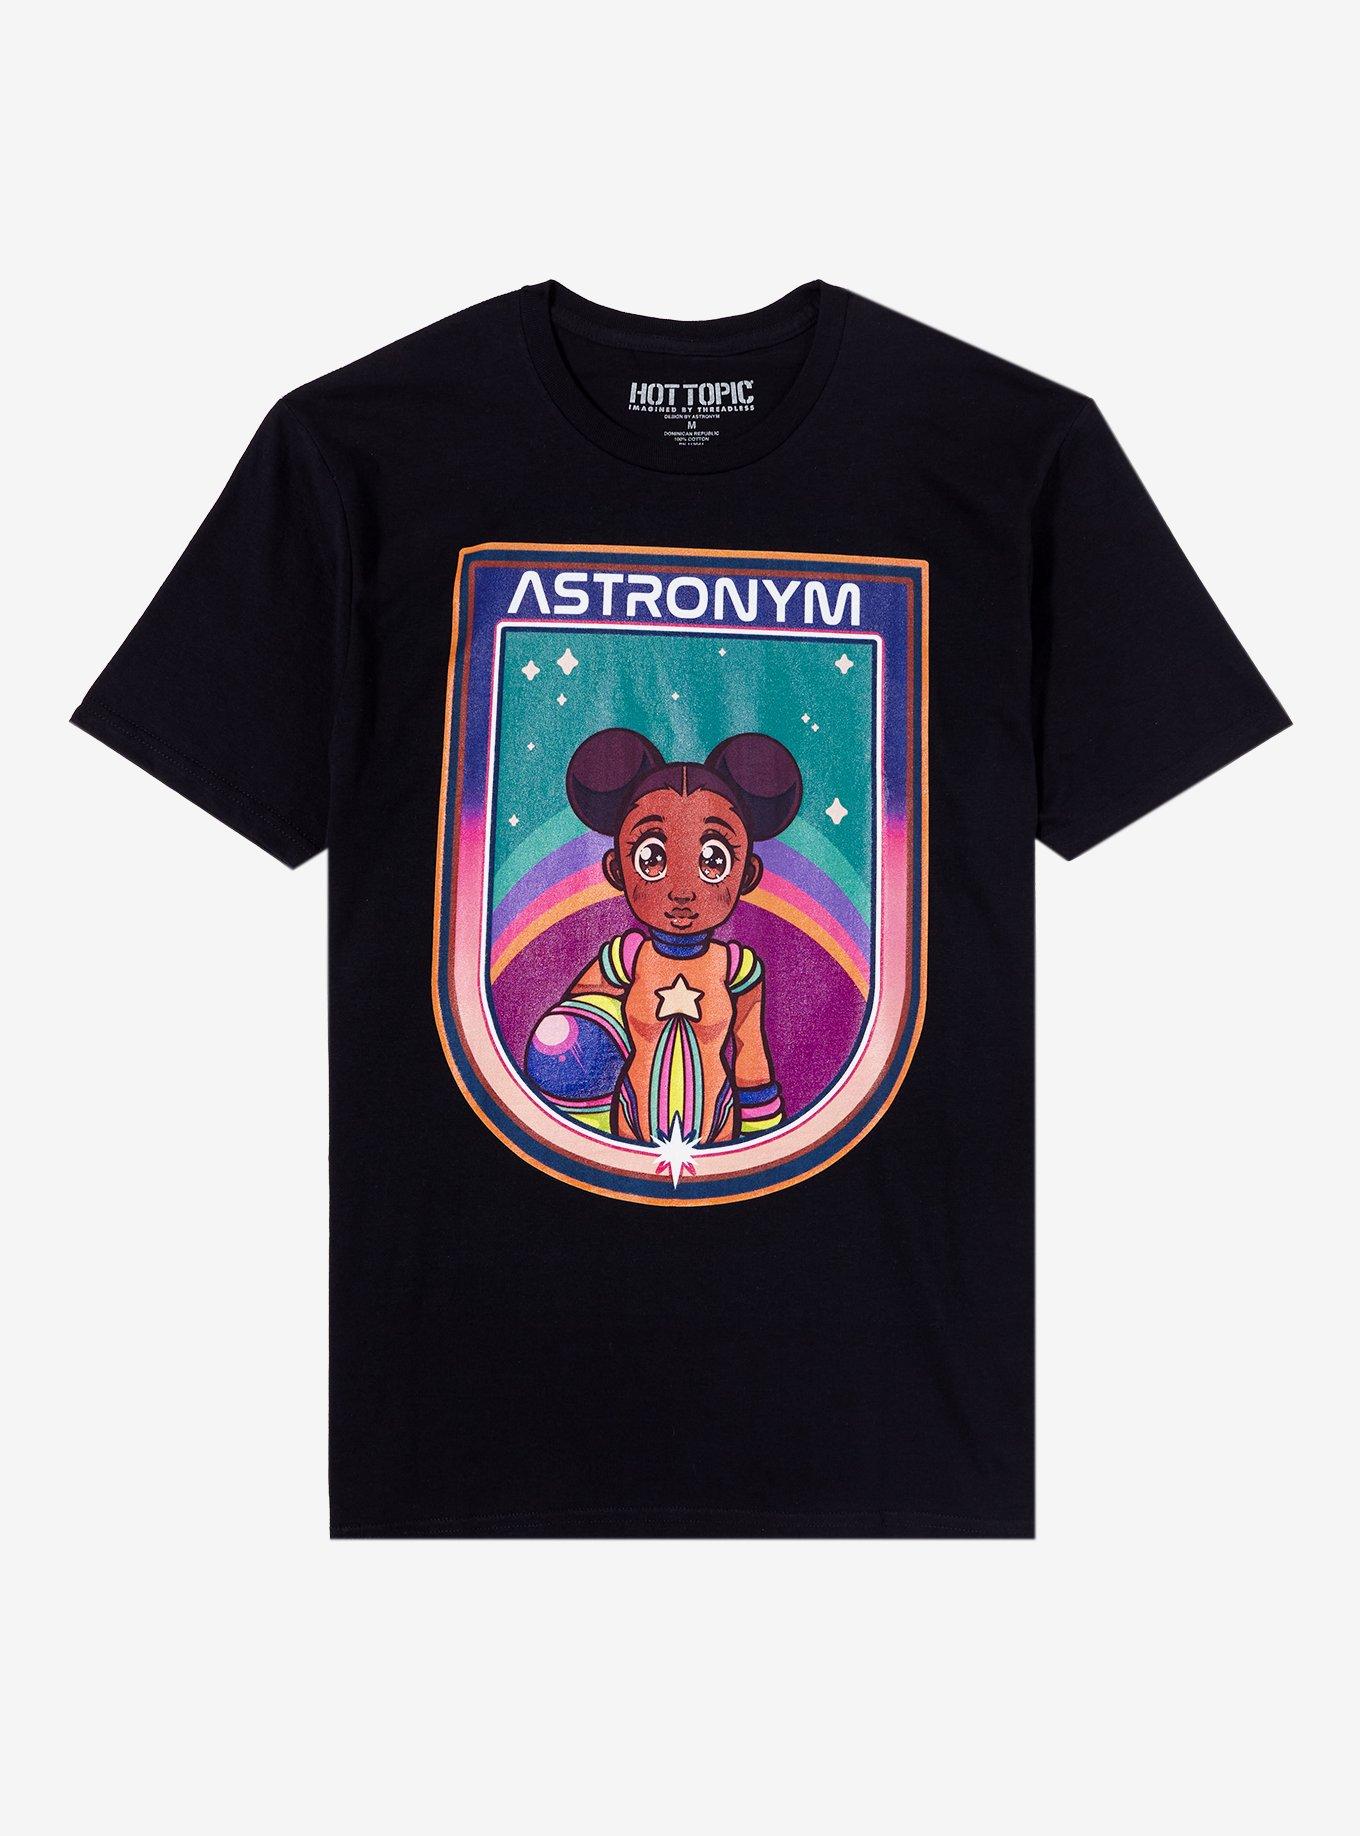 Rainbow Girl Astronaut T-Shirt By Astronym